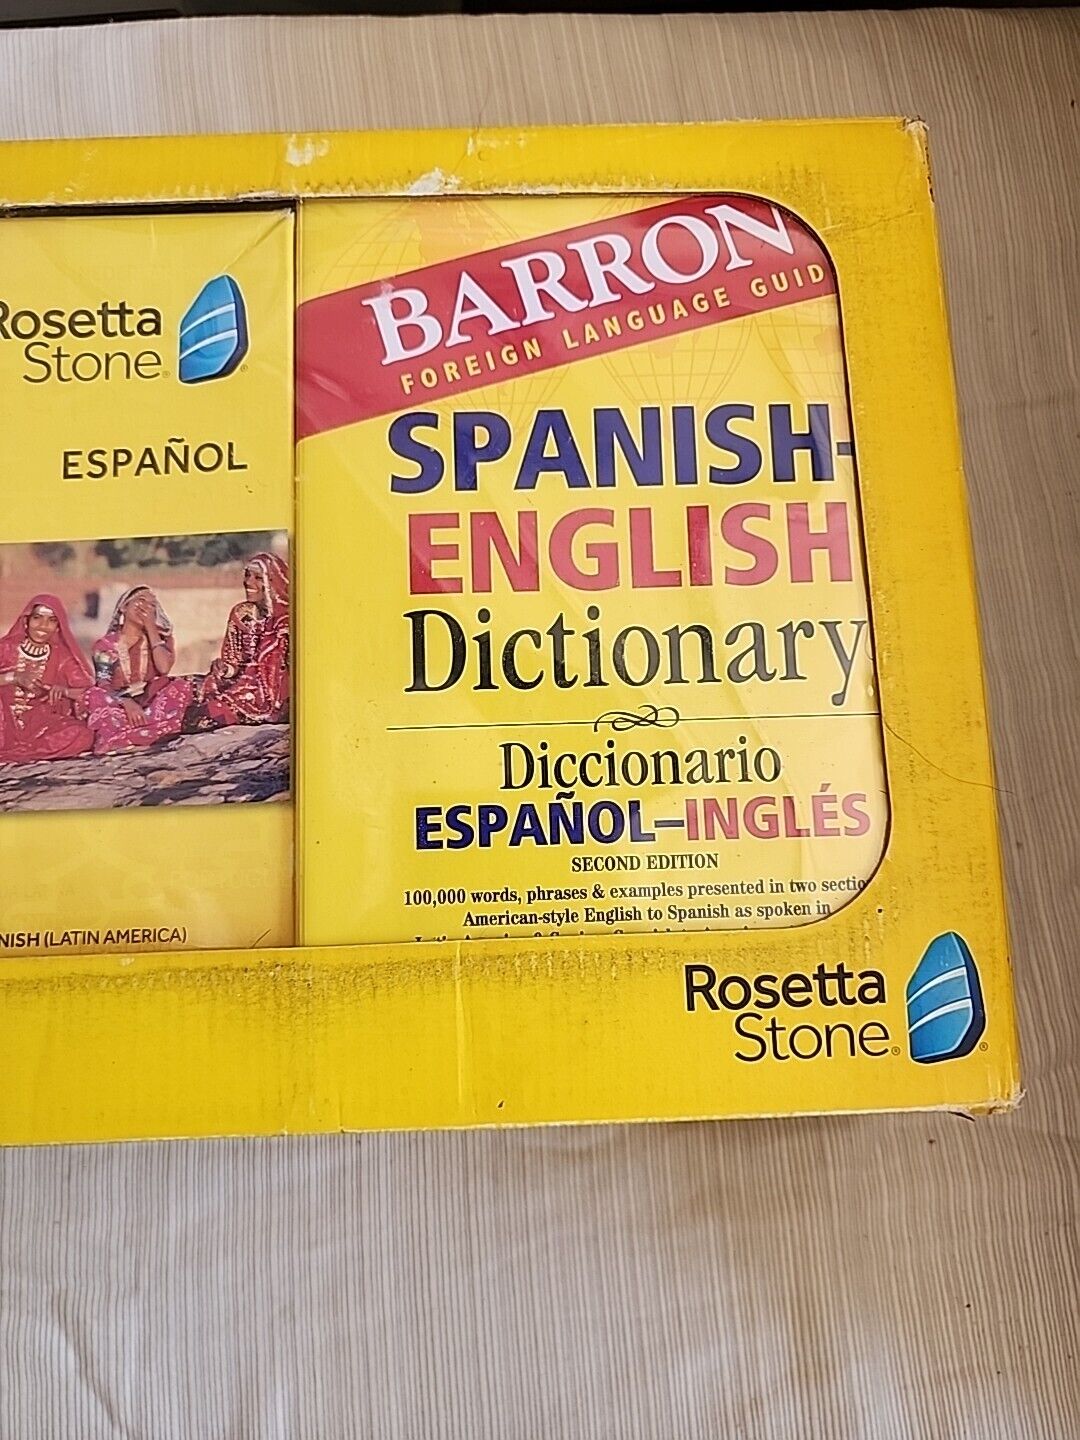 New Rosetta Stone Español Spanish Level 1-5 Boxed Set w/ Barron's Dictionary